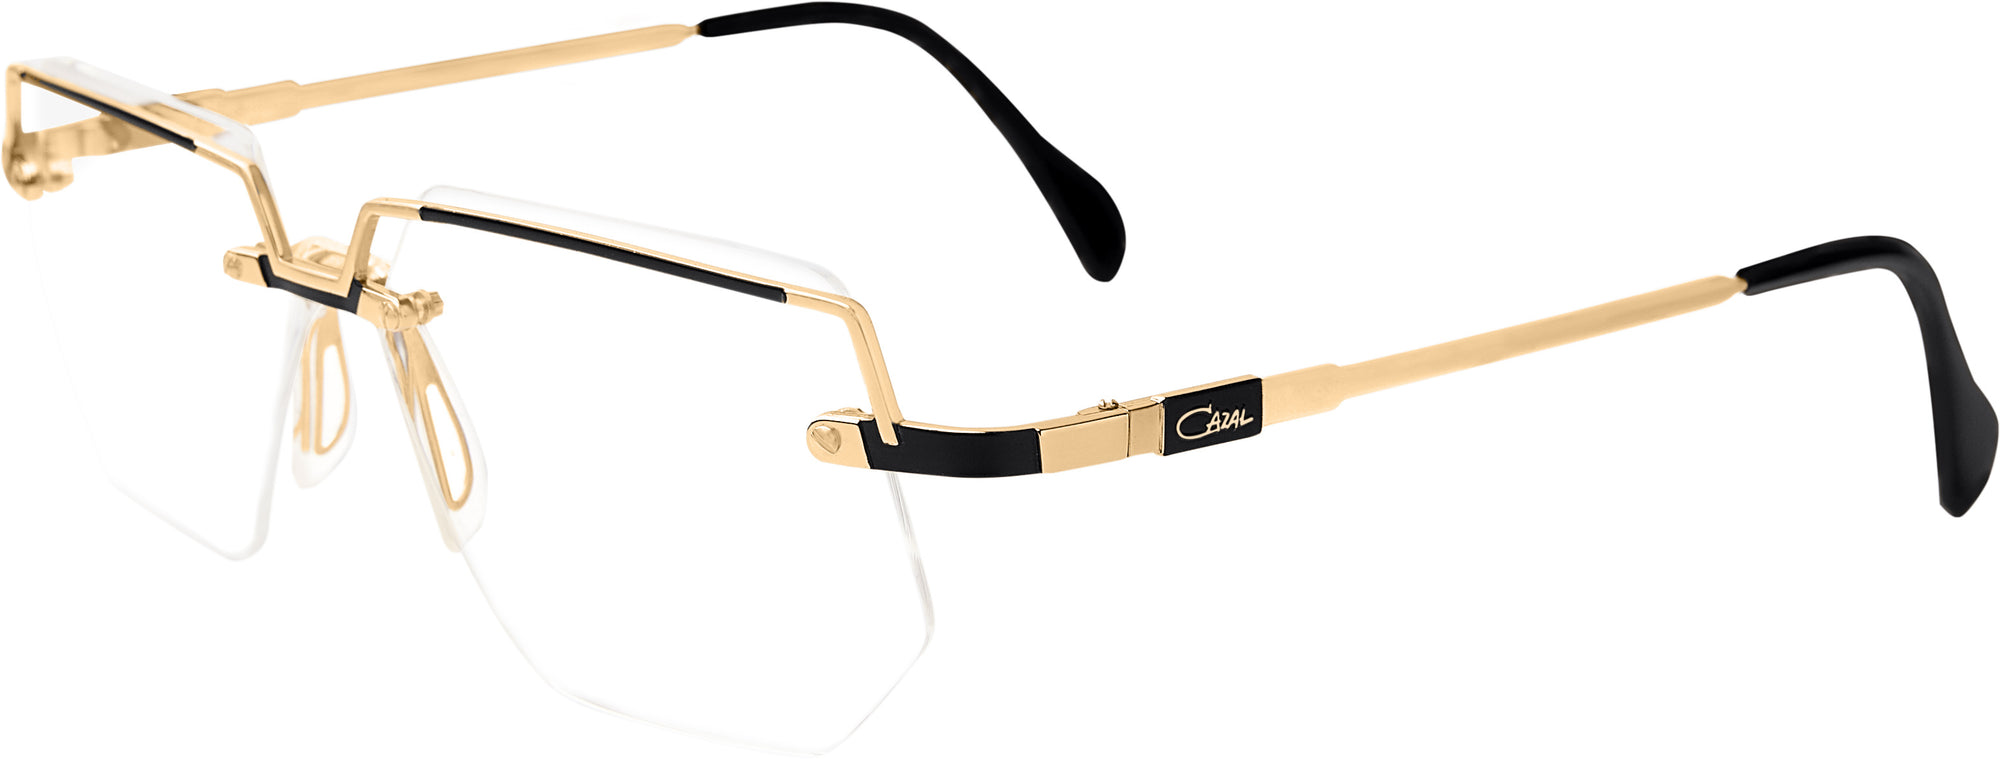 Cazal 742  COLOR:  095 BLACK-GOLD SIZE:  59/13 Eyeglasses